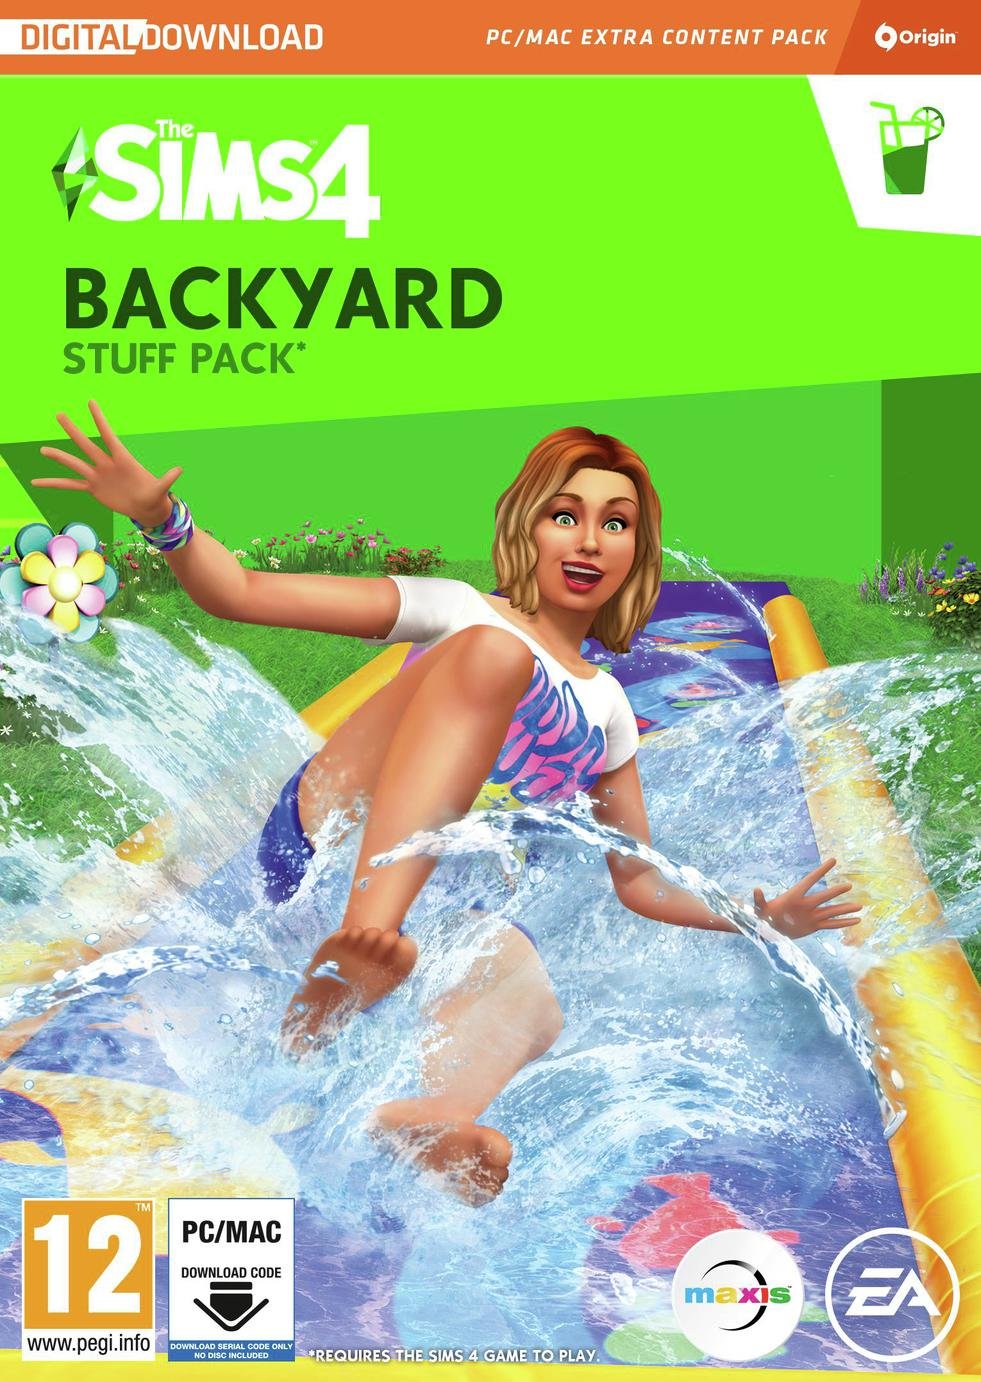 The Sims 4 Backyard Stuff Pack PC Game